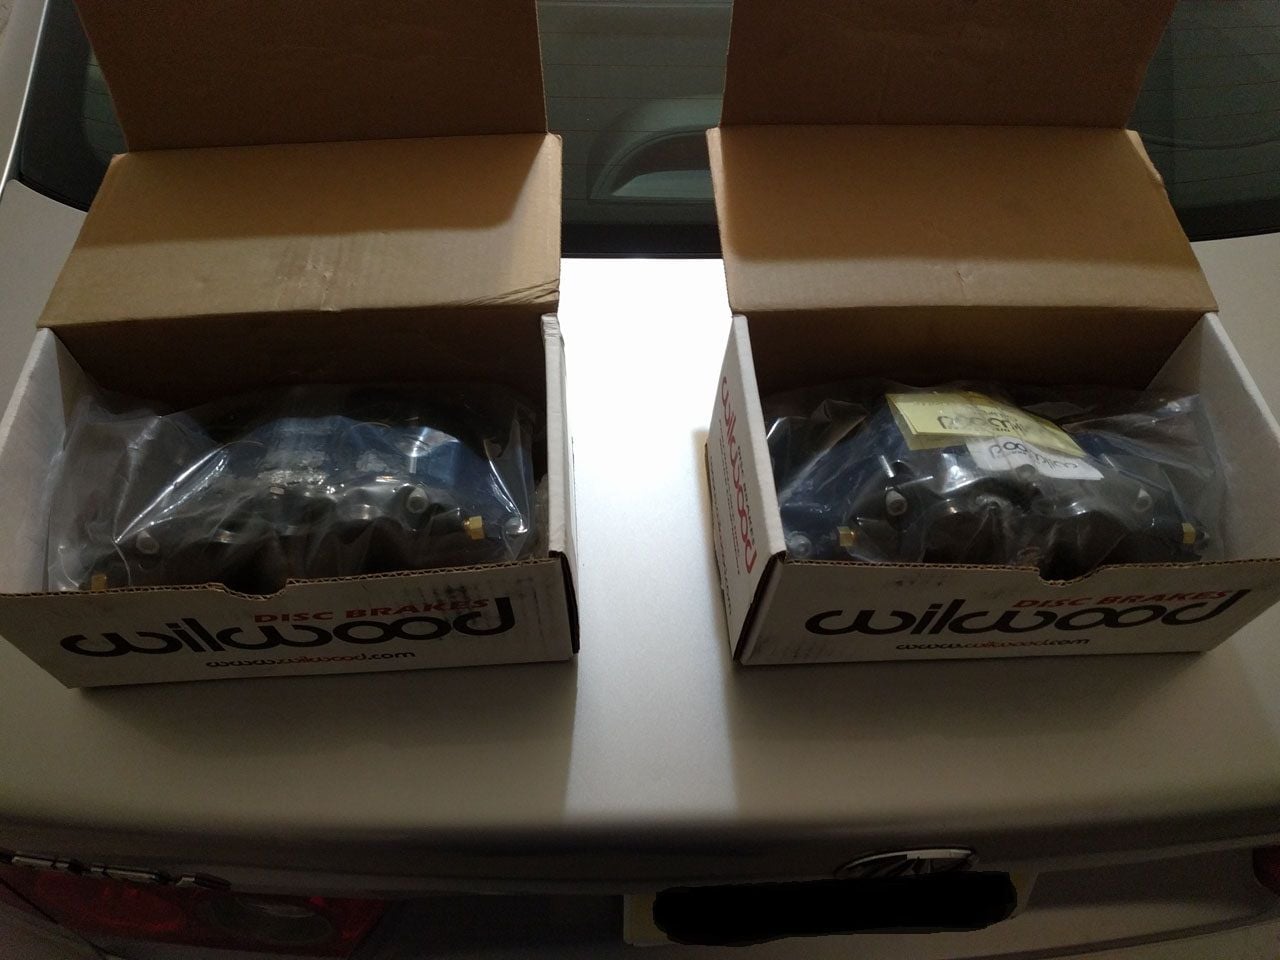 Brakes - SOLD: Fastbrakes 4 Piston Wilwood Caliper 12.6" Big Brake kit for 2004-2014 Acura TSX - New - 2004 to 2014 Acura TSX - Glassboro, NJ 08028, United States